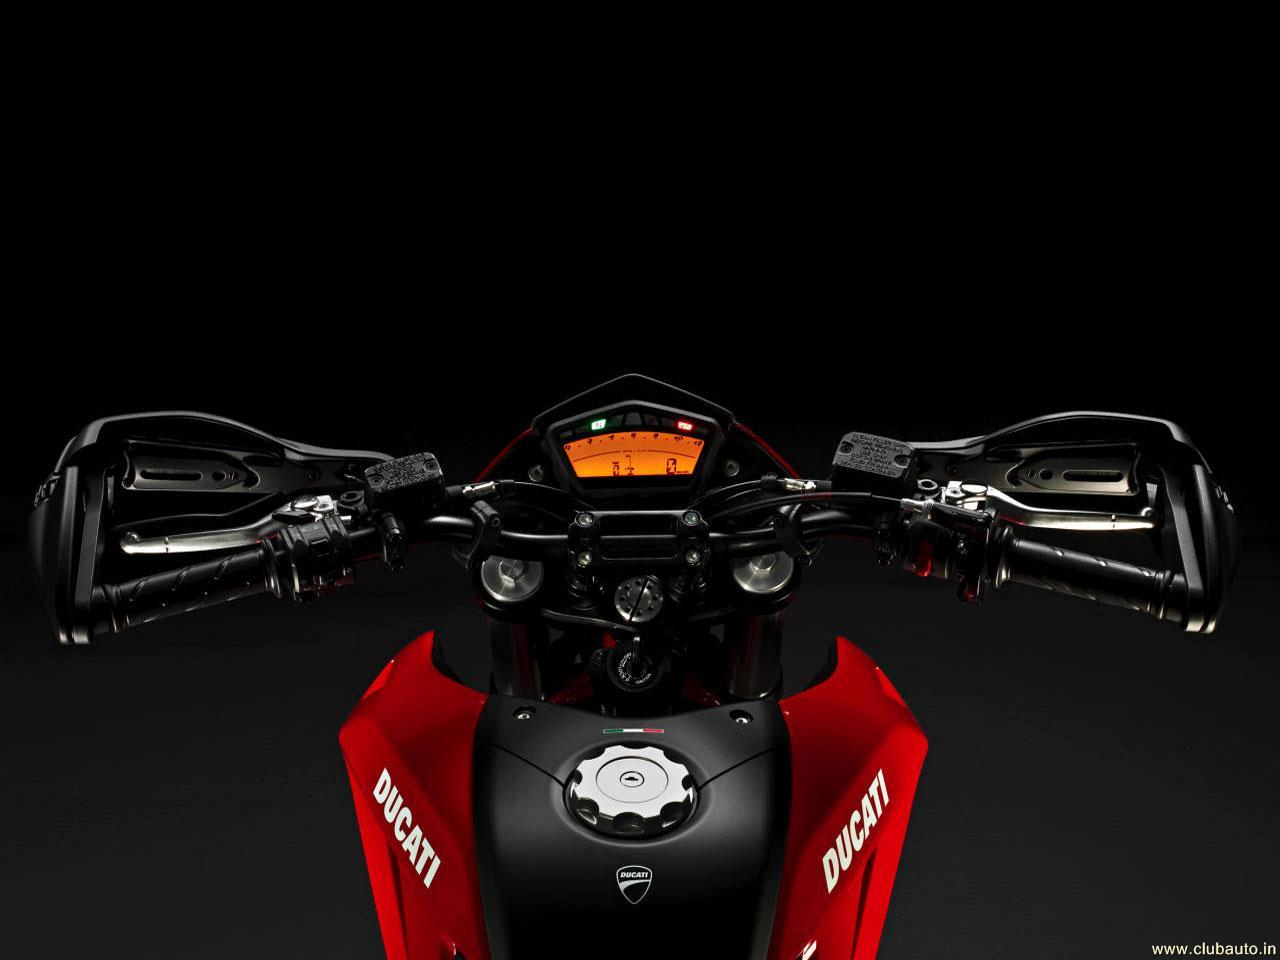 Wallpaper > Bikes > Ducati > Hypermotard > Ducati Hypermotard high